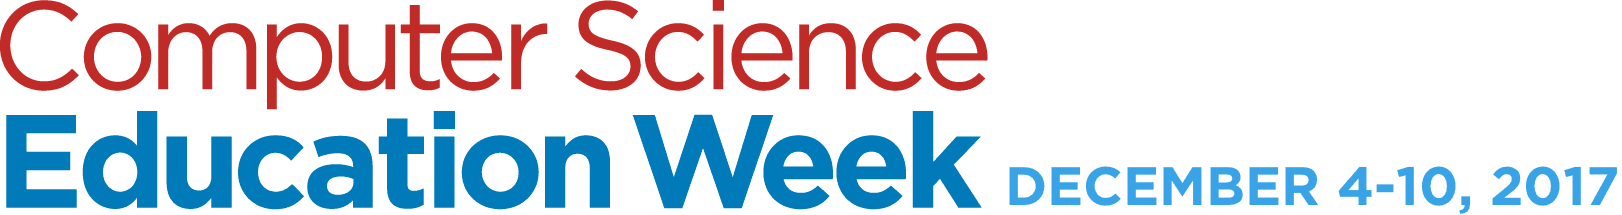 Computer Science Education Week - Tjedan informatike edukacije